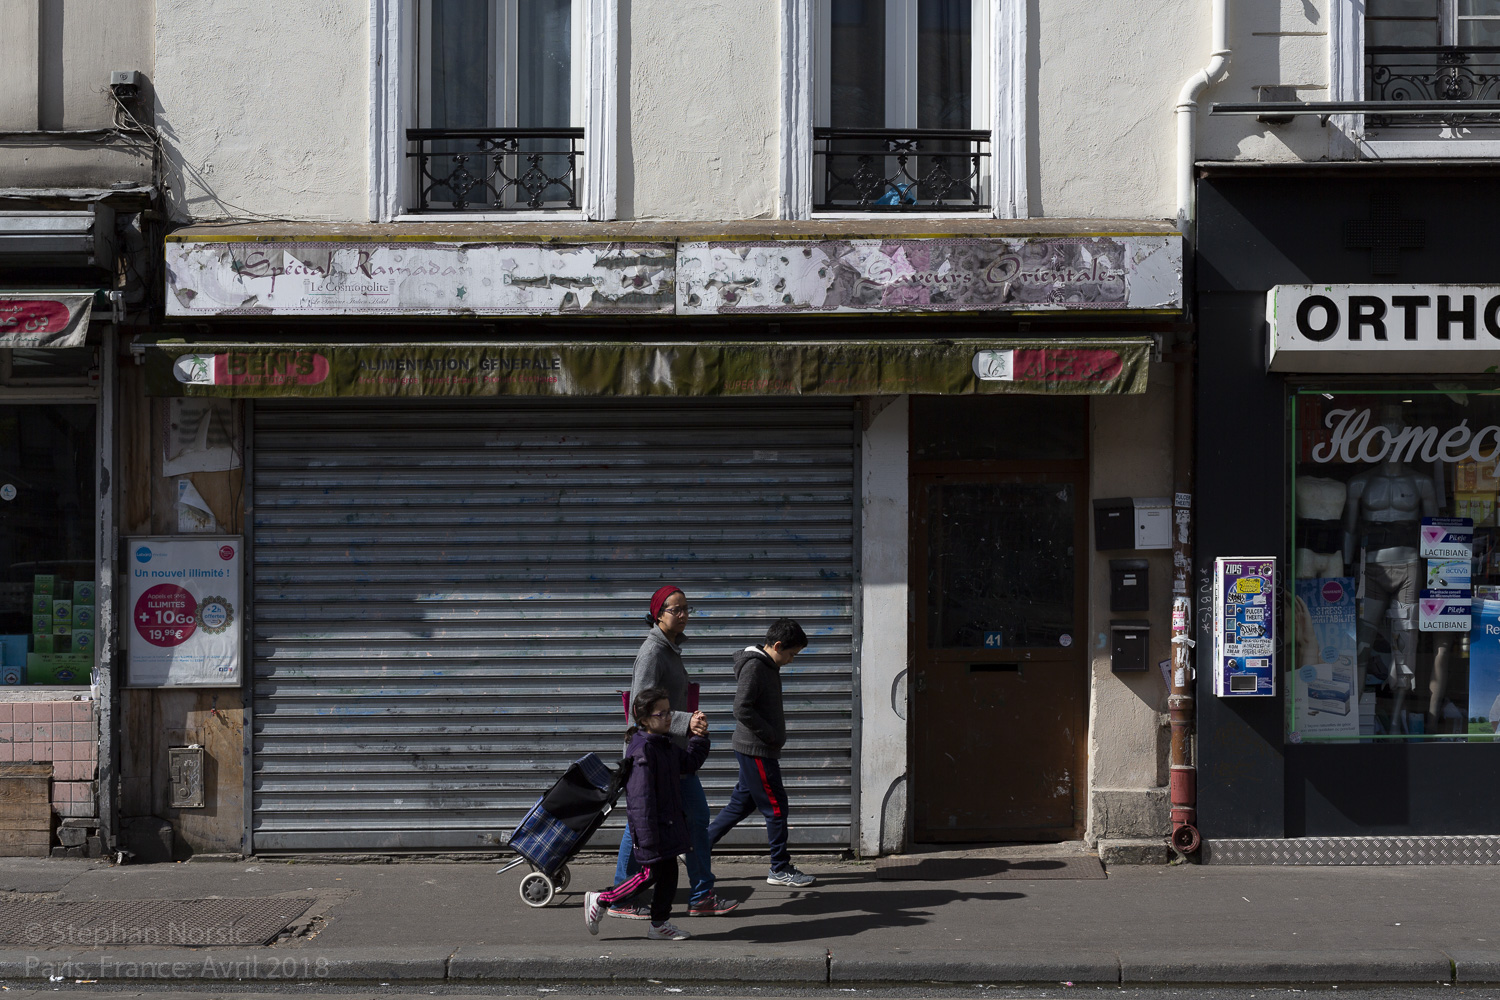 Streetphotography, photo de rue. Paris. France.